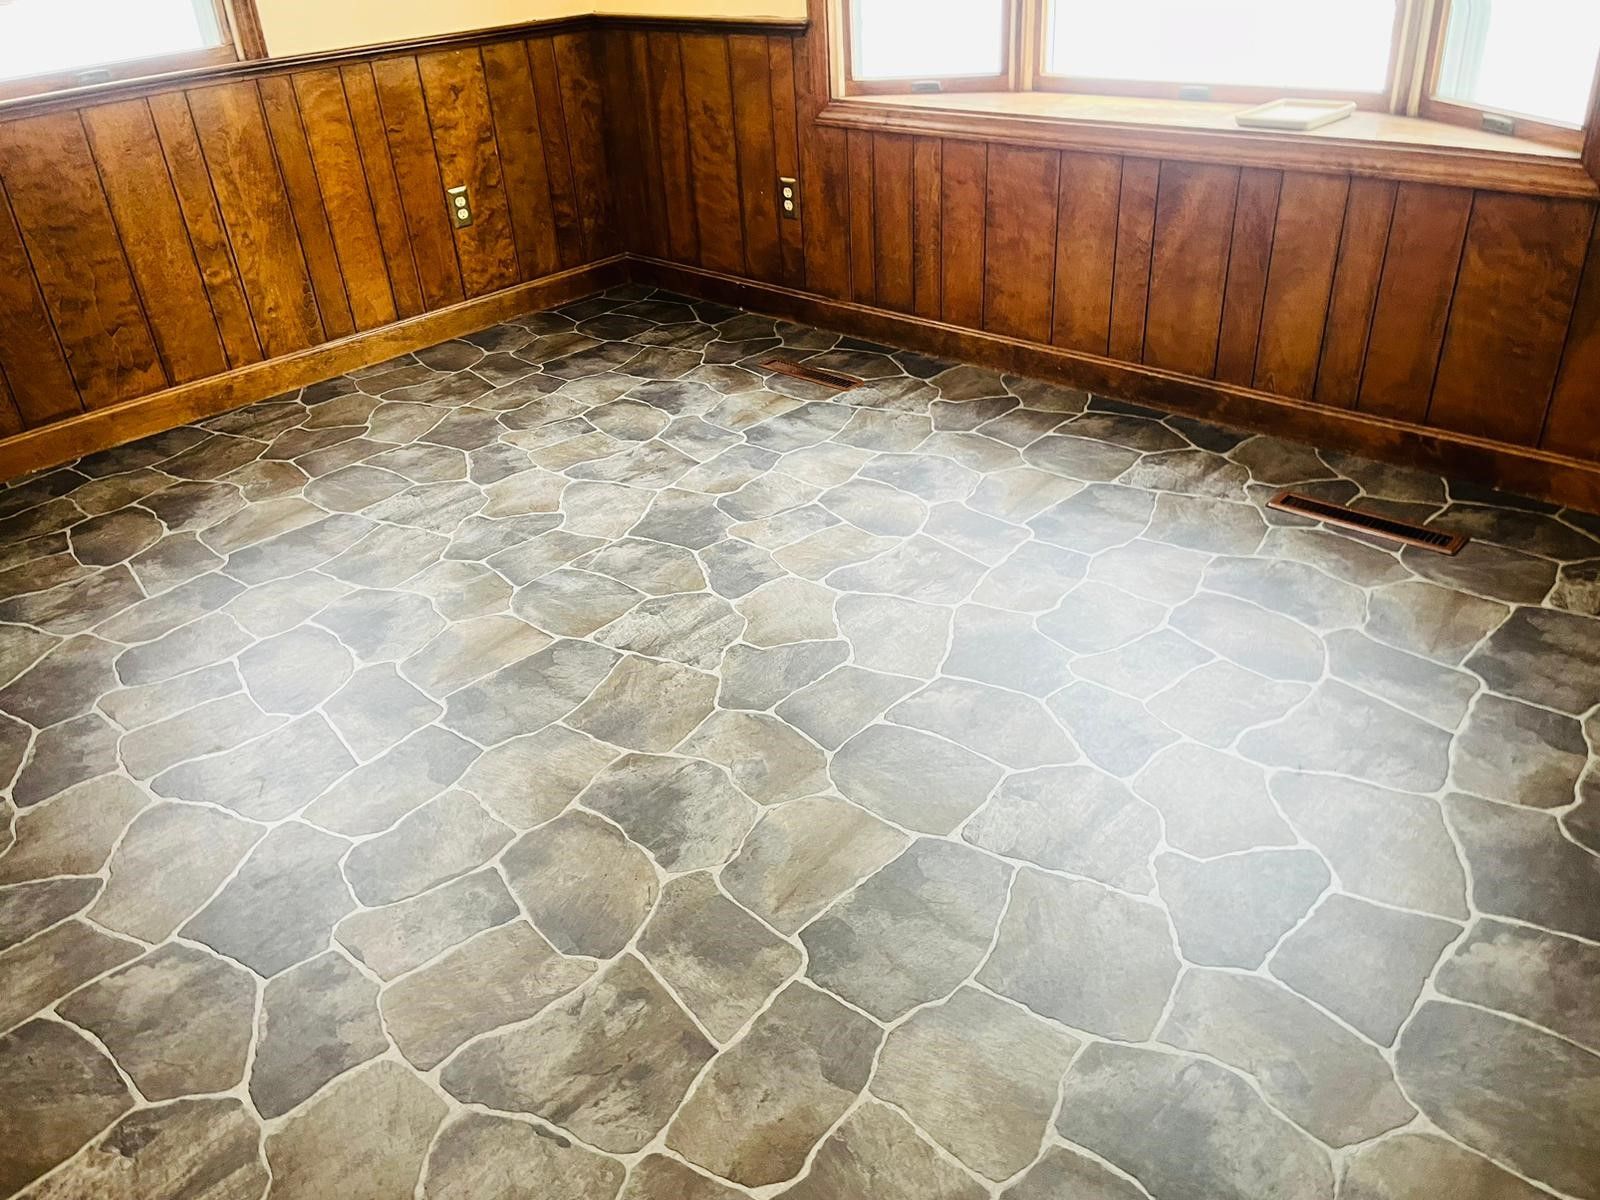 Tile flooring options